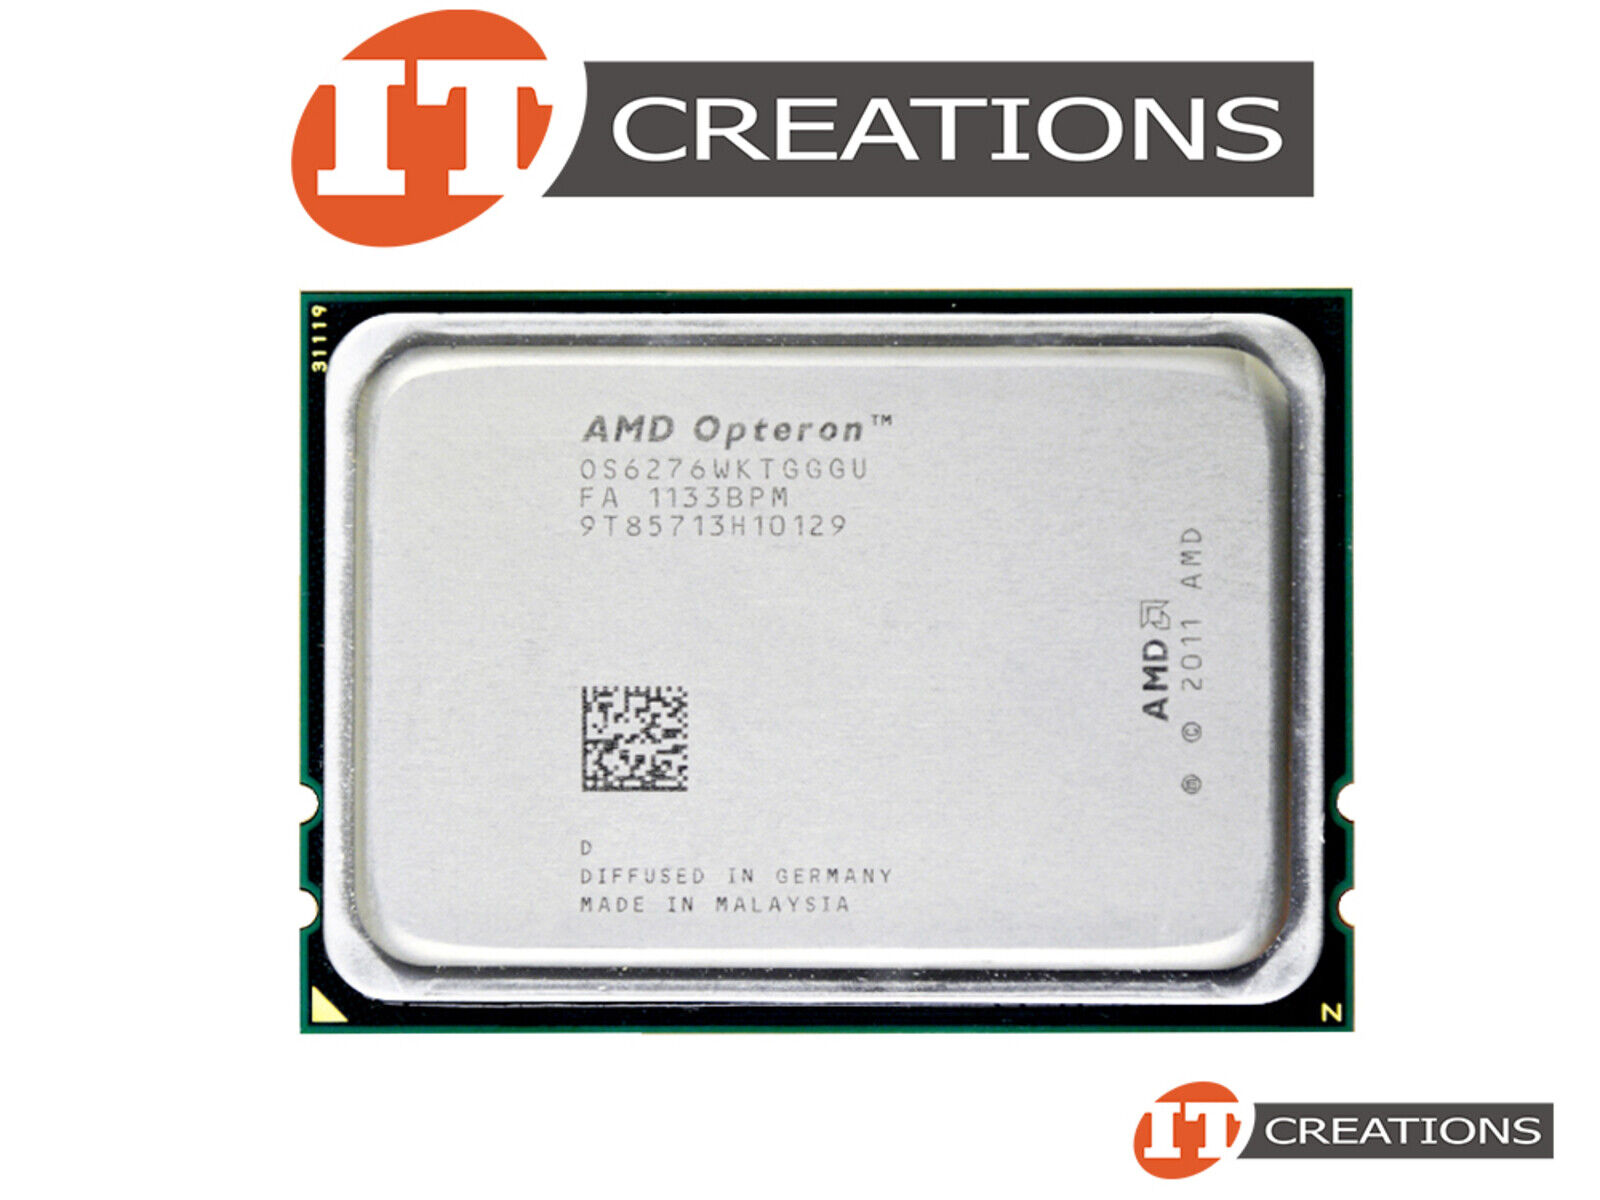 AMD OPTERON 16 CORE PROCESSOR 6276 2.30GHZ 16MB L3 CACHE 115W OS6276WKTGGGUWOF